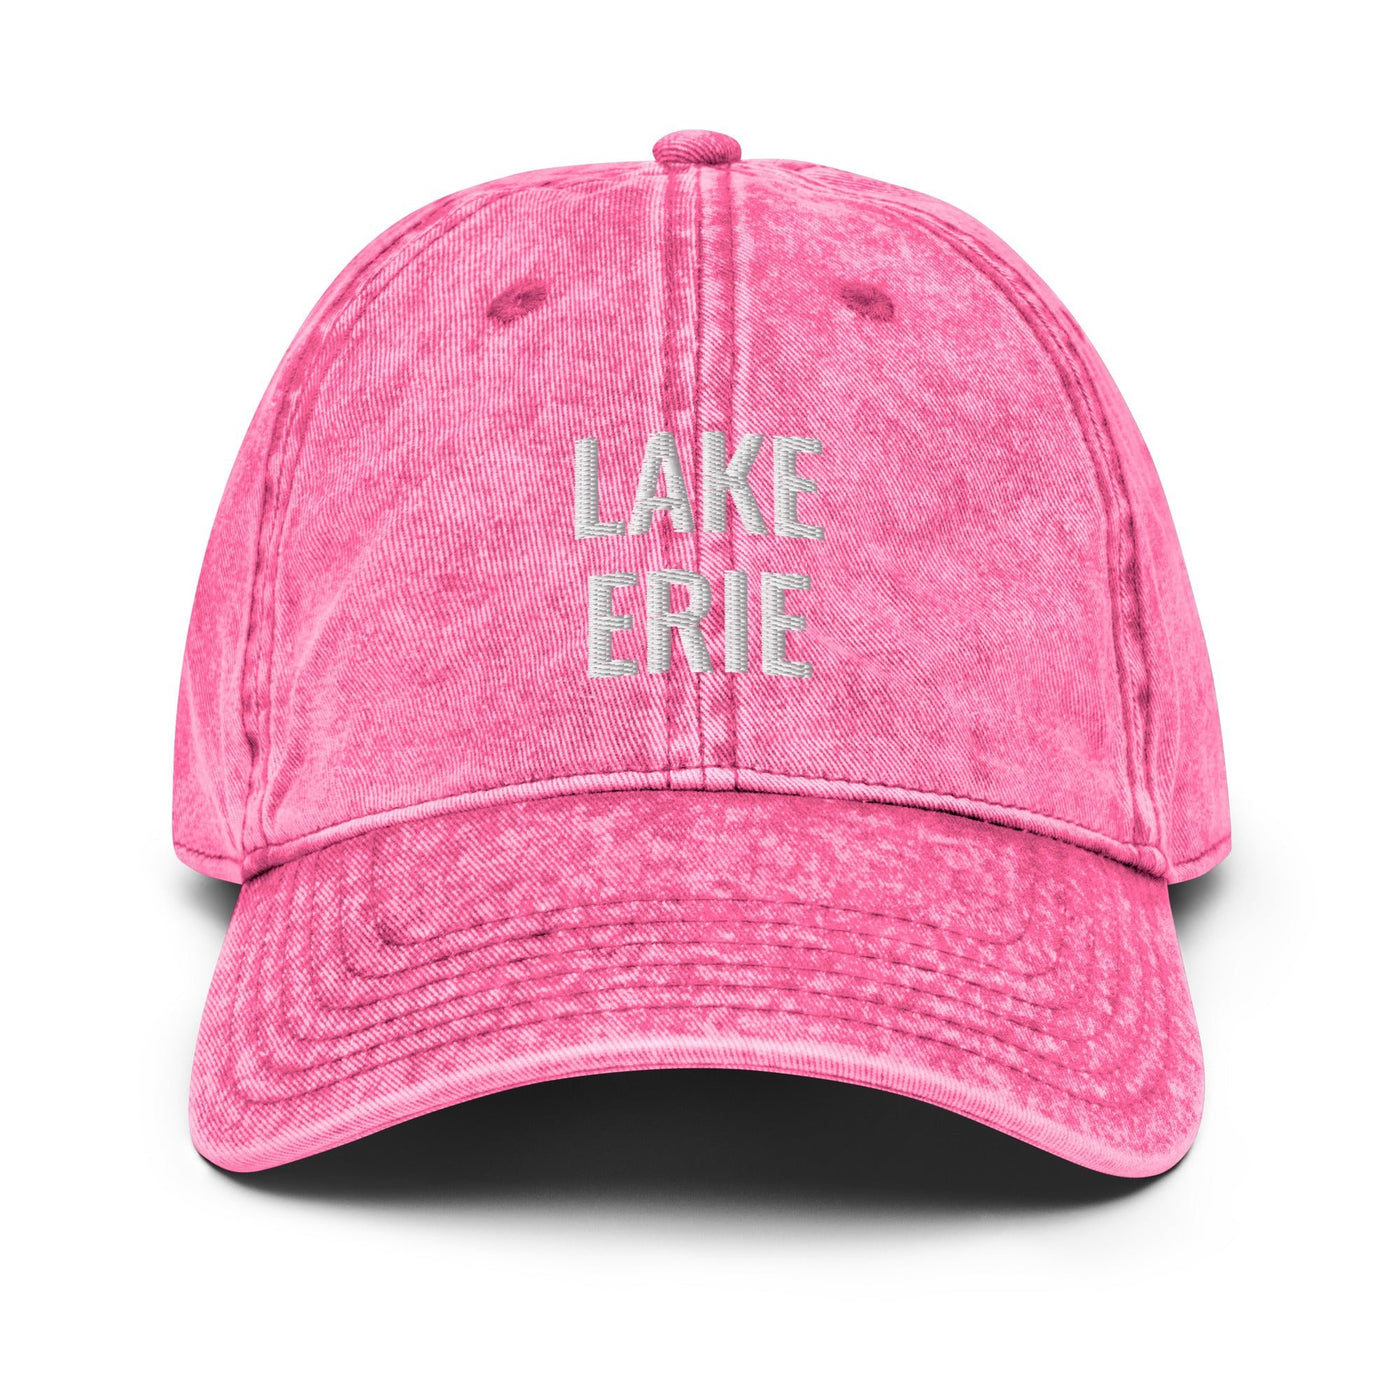 Lake Erie Hat - Ezra's Clothing